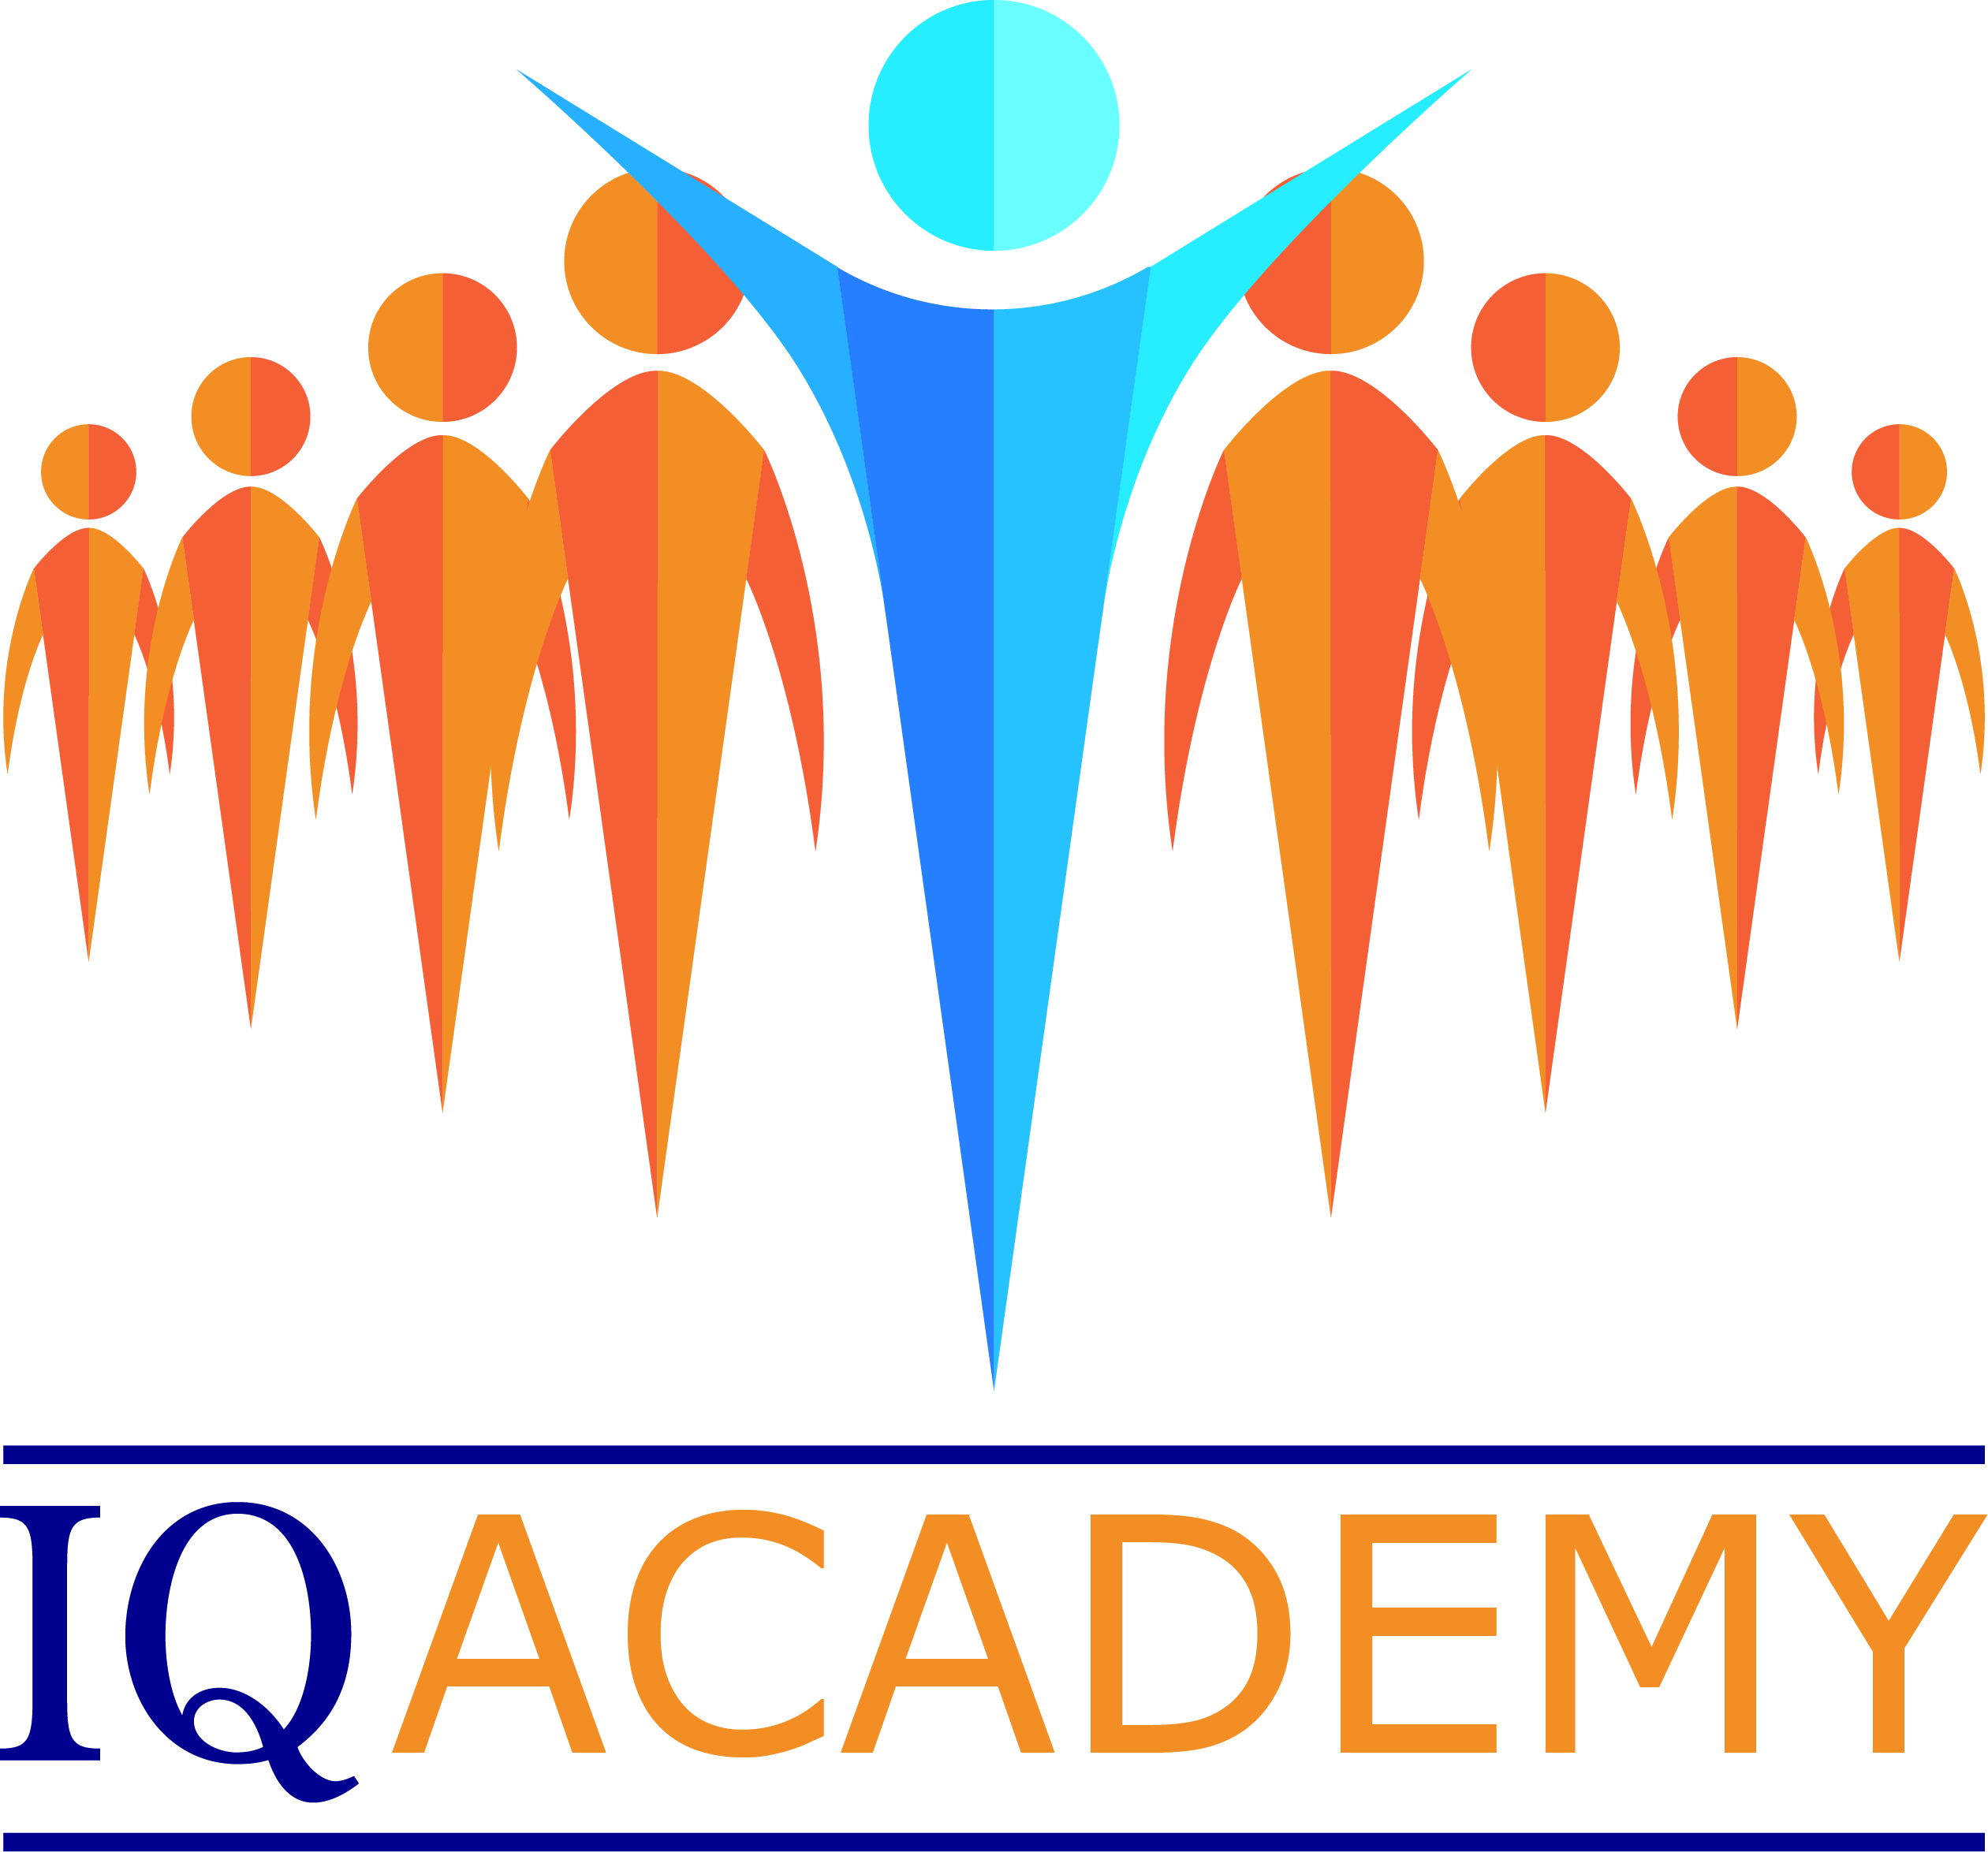 IQ Academy logo